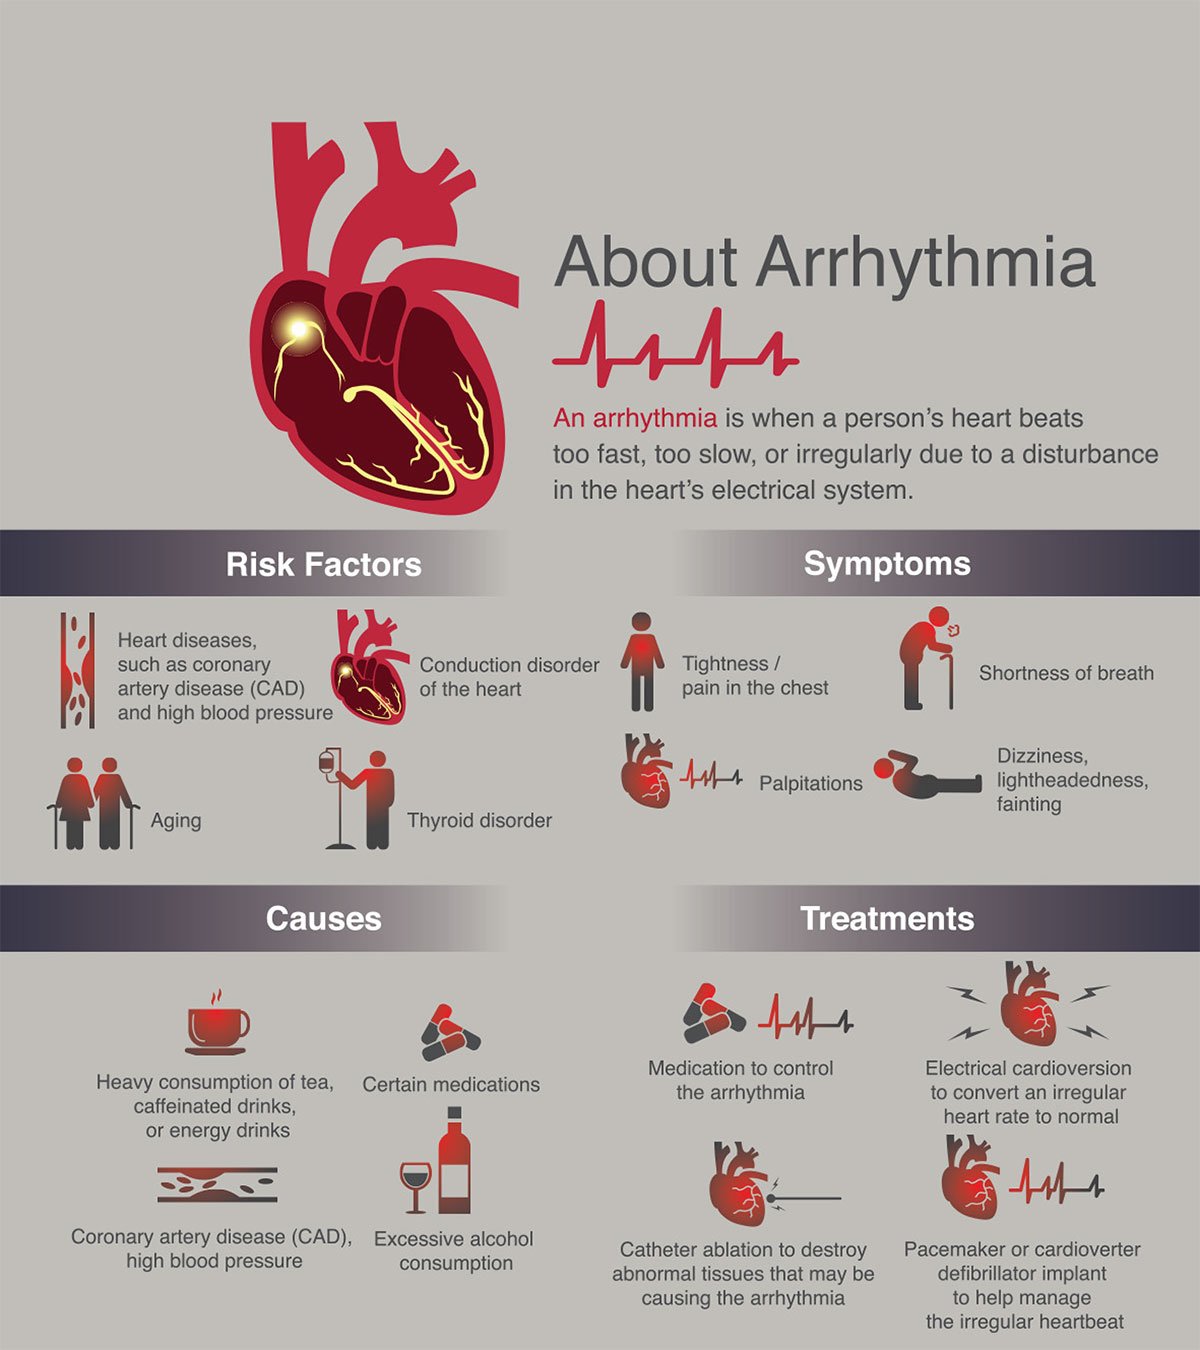 About Arrhythmia Infographic best Bangkok Thailand